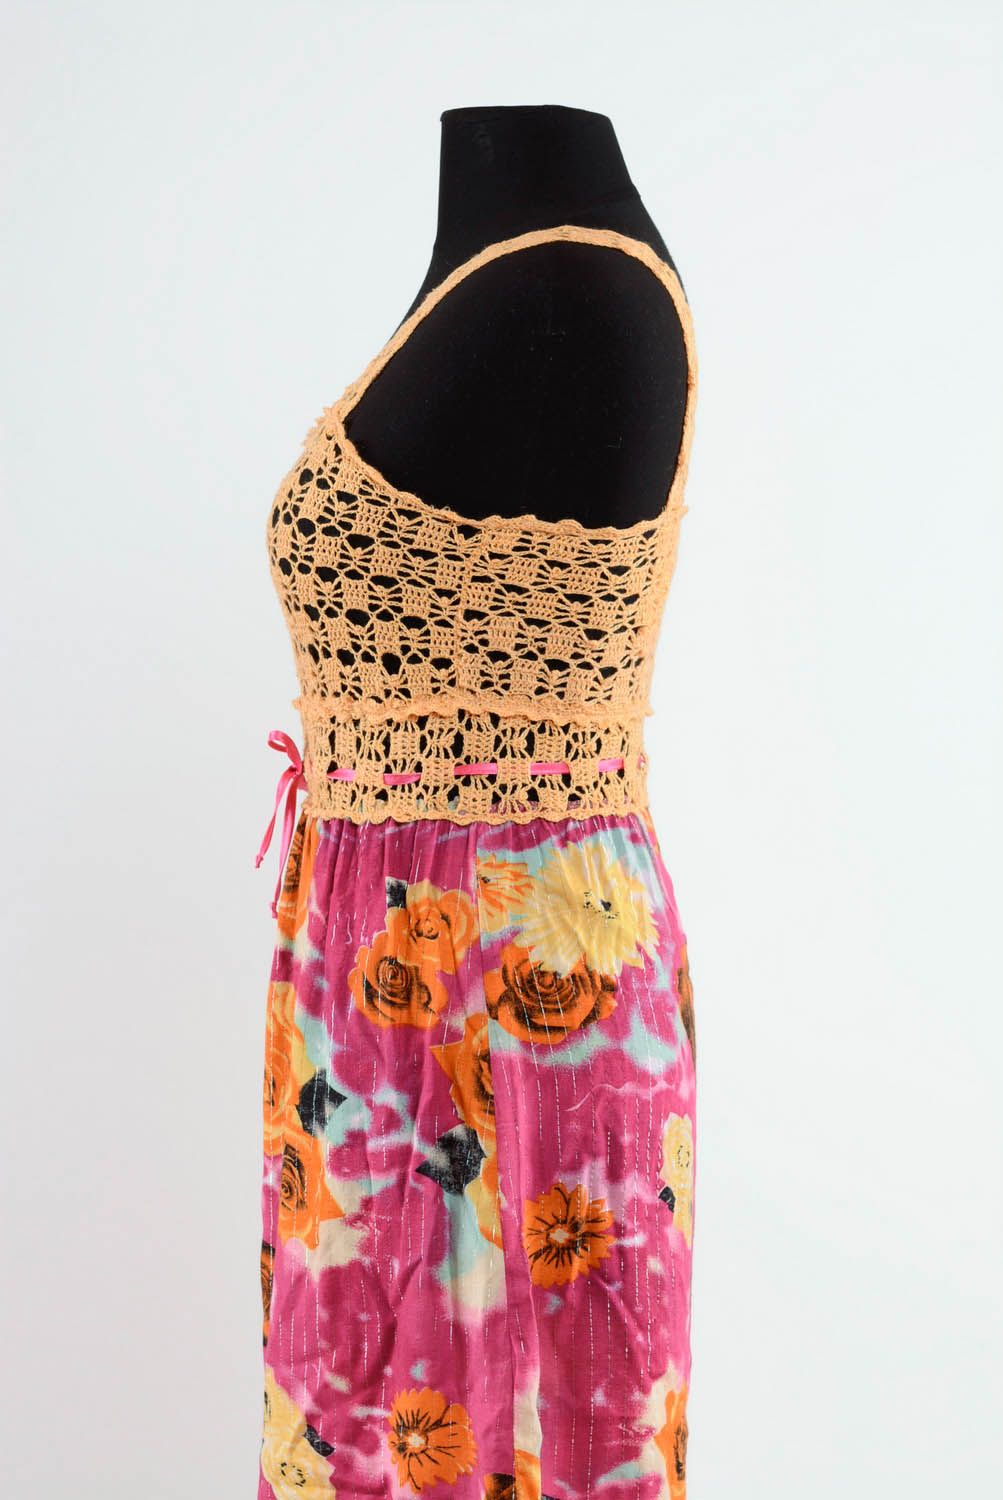 Crocheted dress photo 3